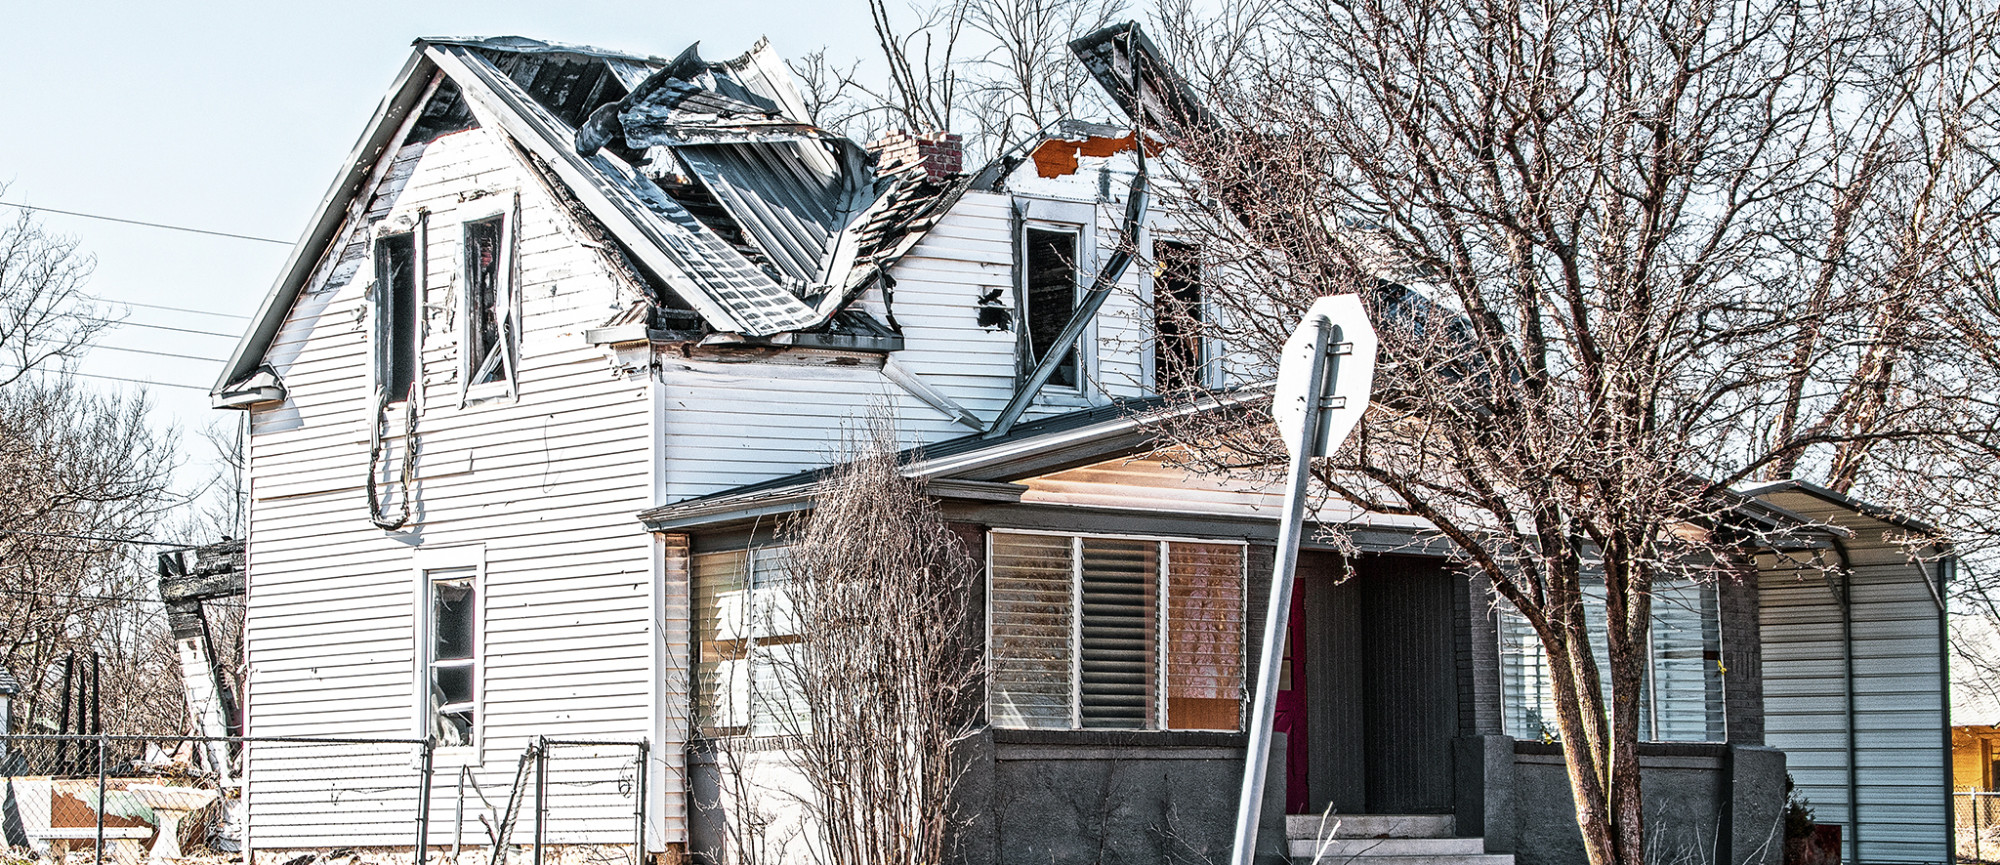 Tornado Residential Damage 2153907643